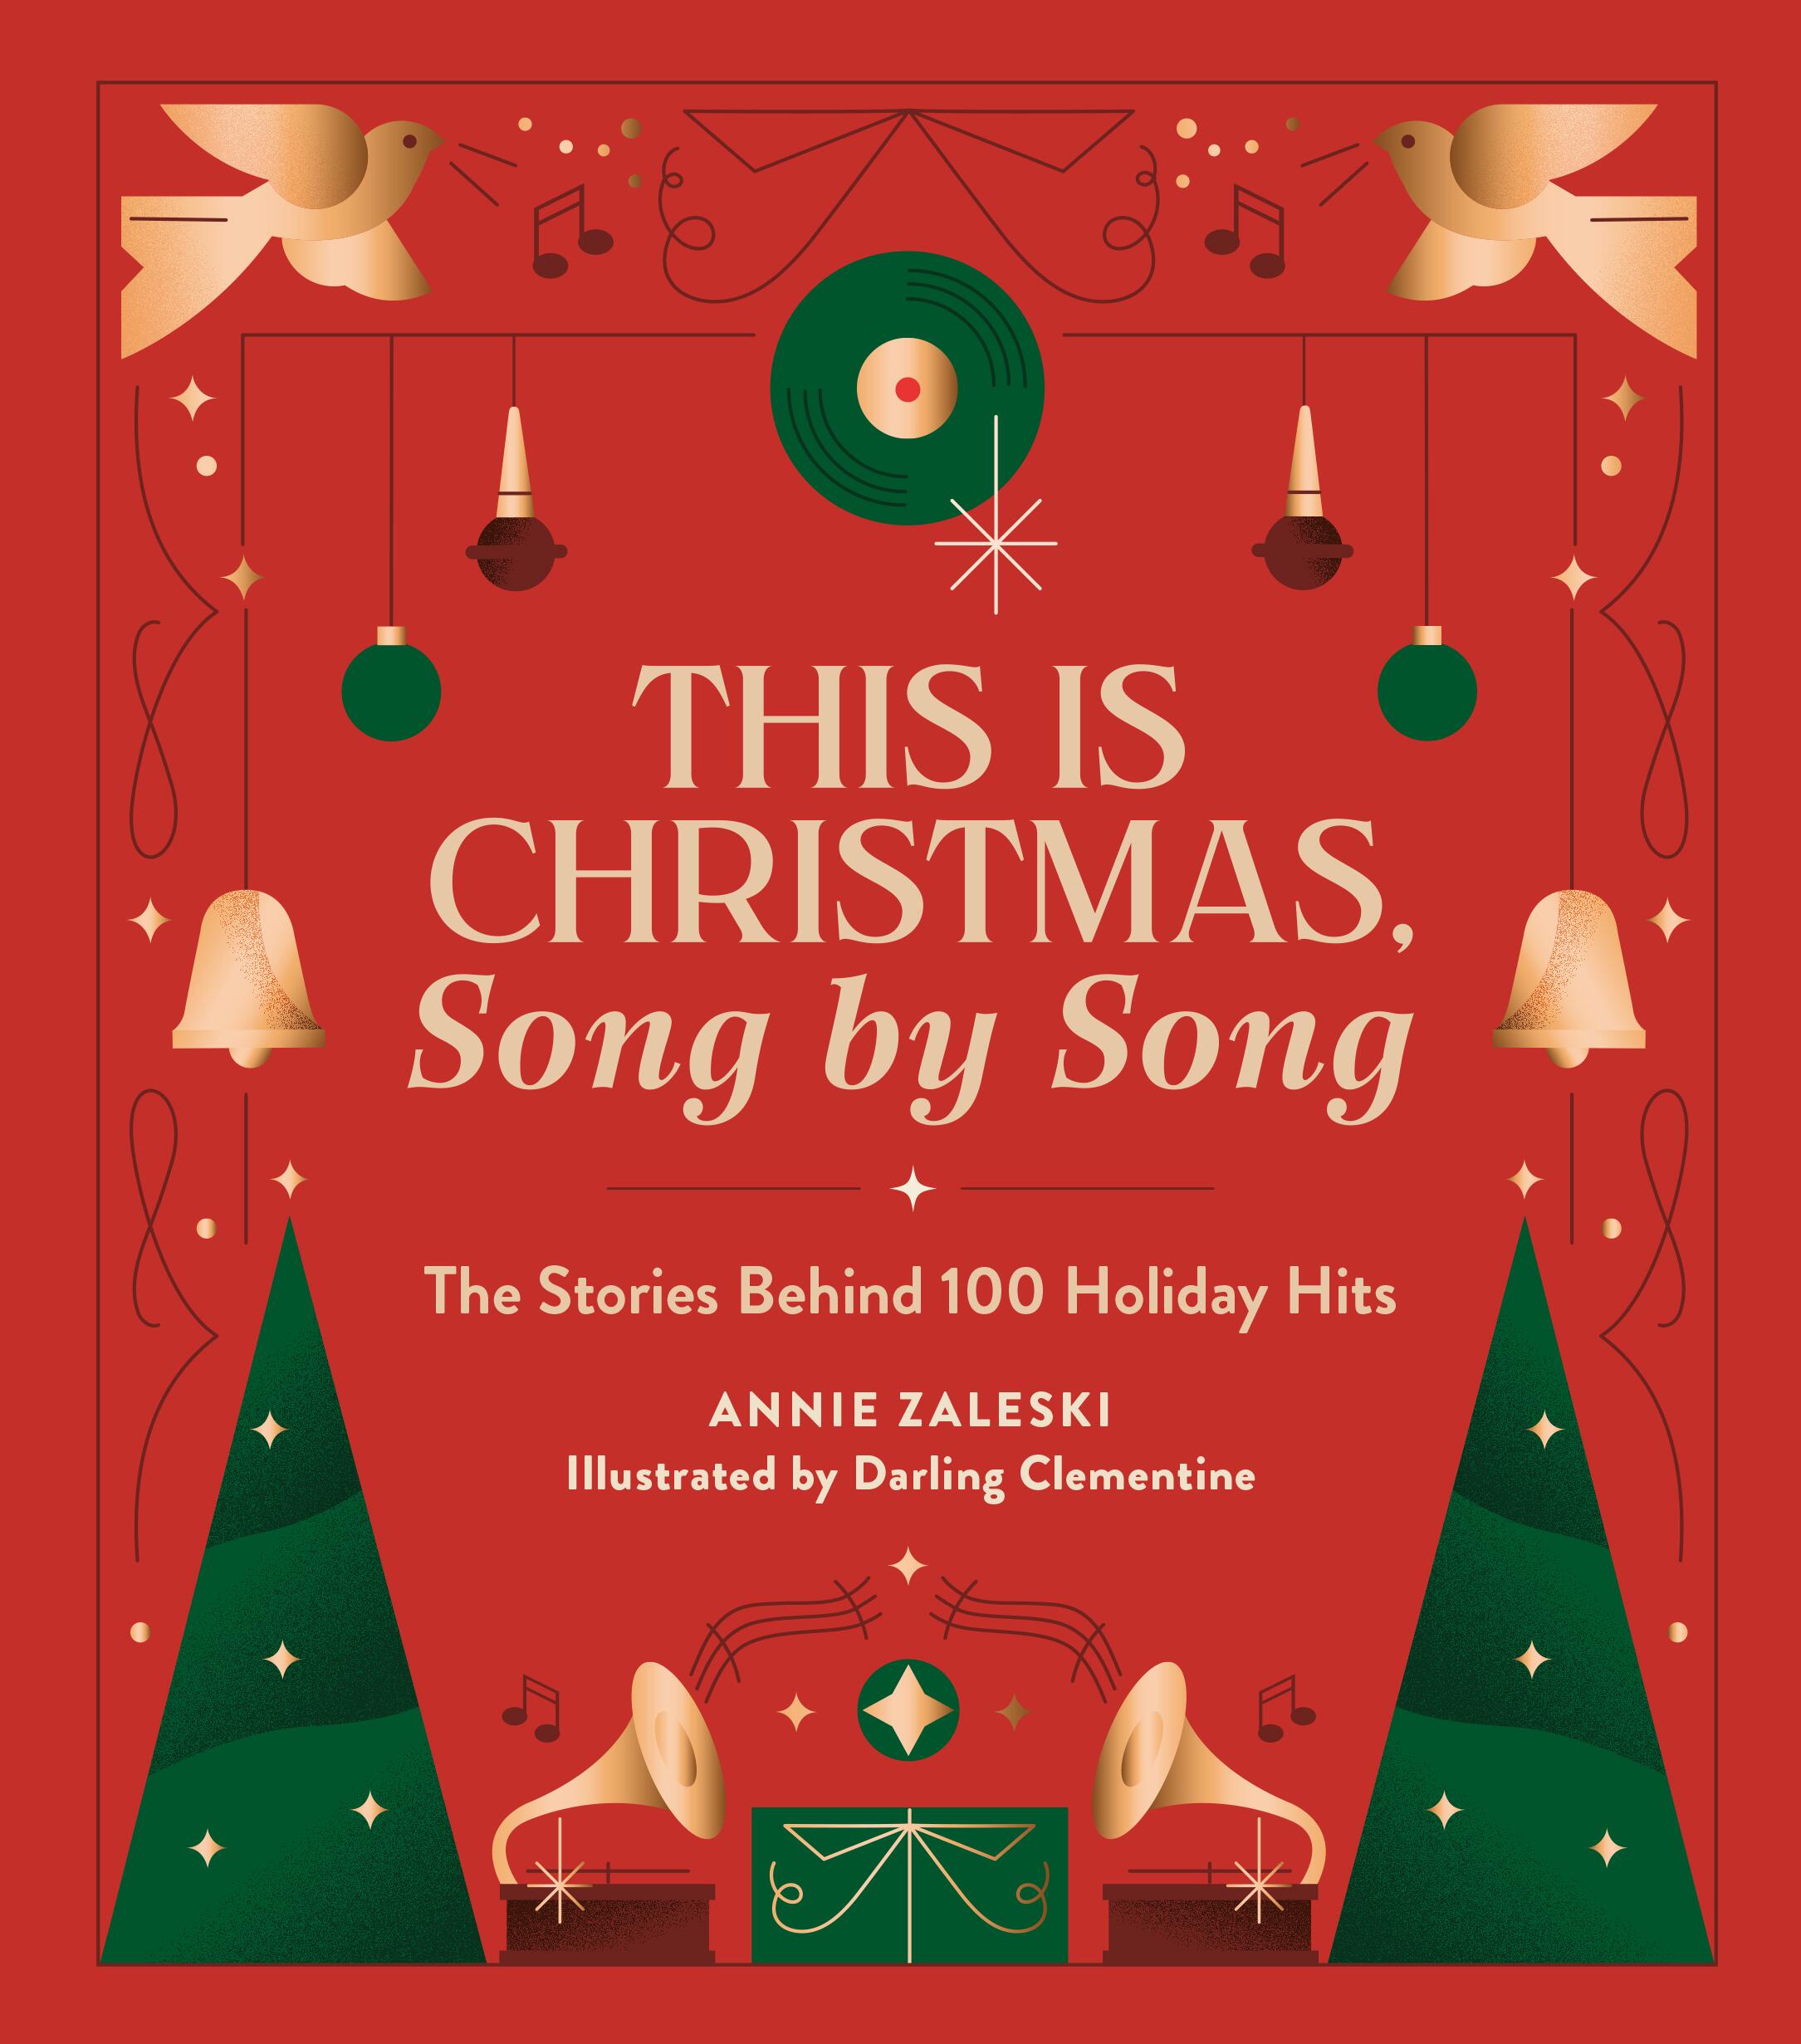 Best Frank Sinatra Christmas Songs: 20 Holiday Classics